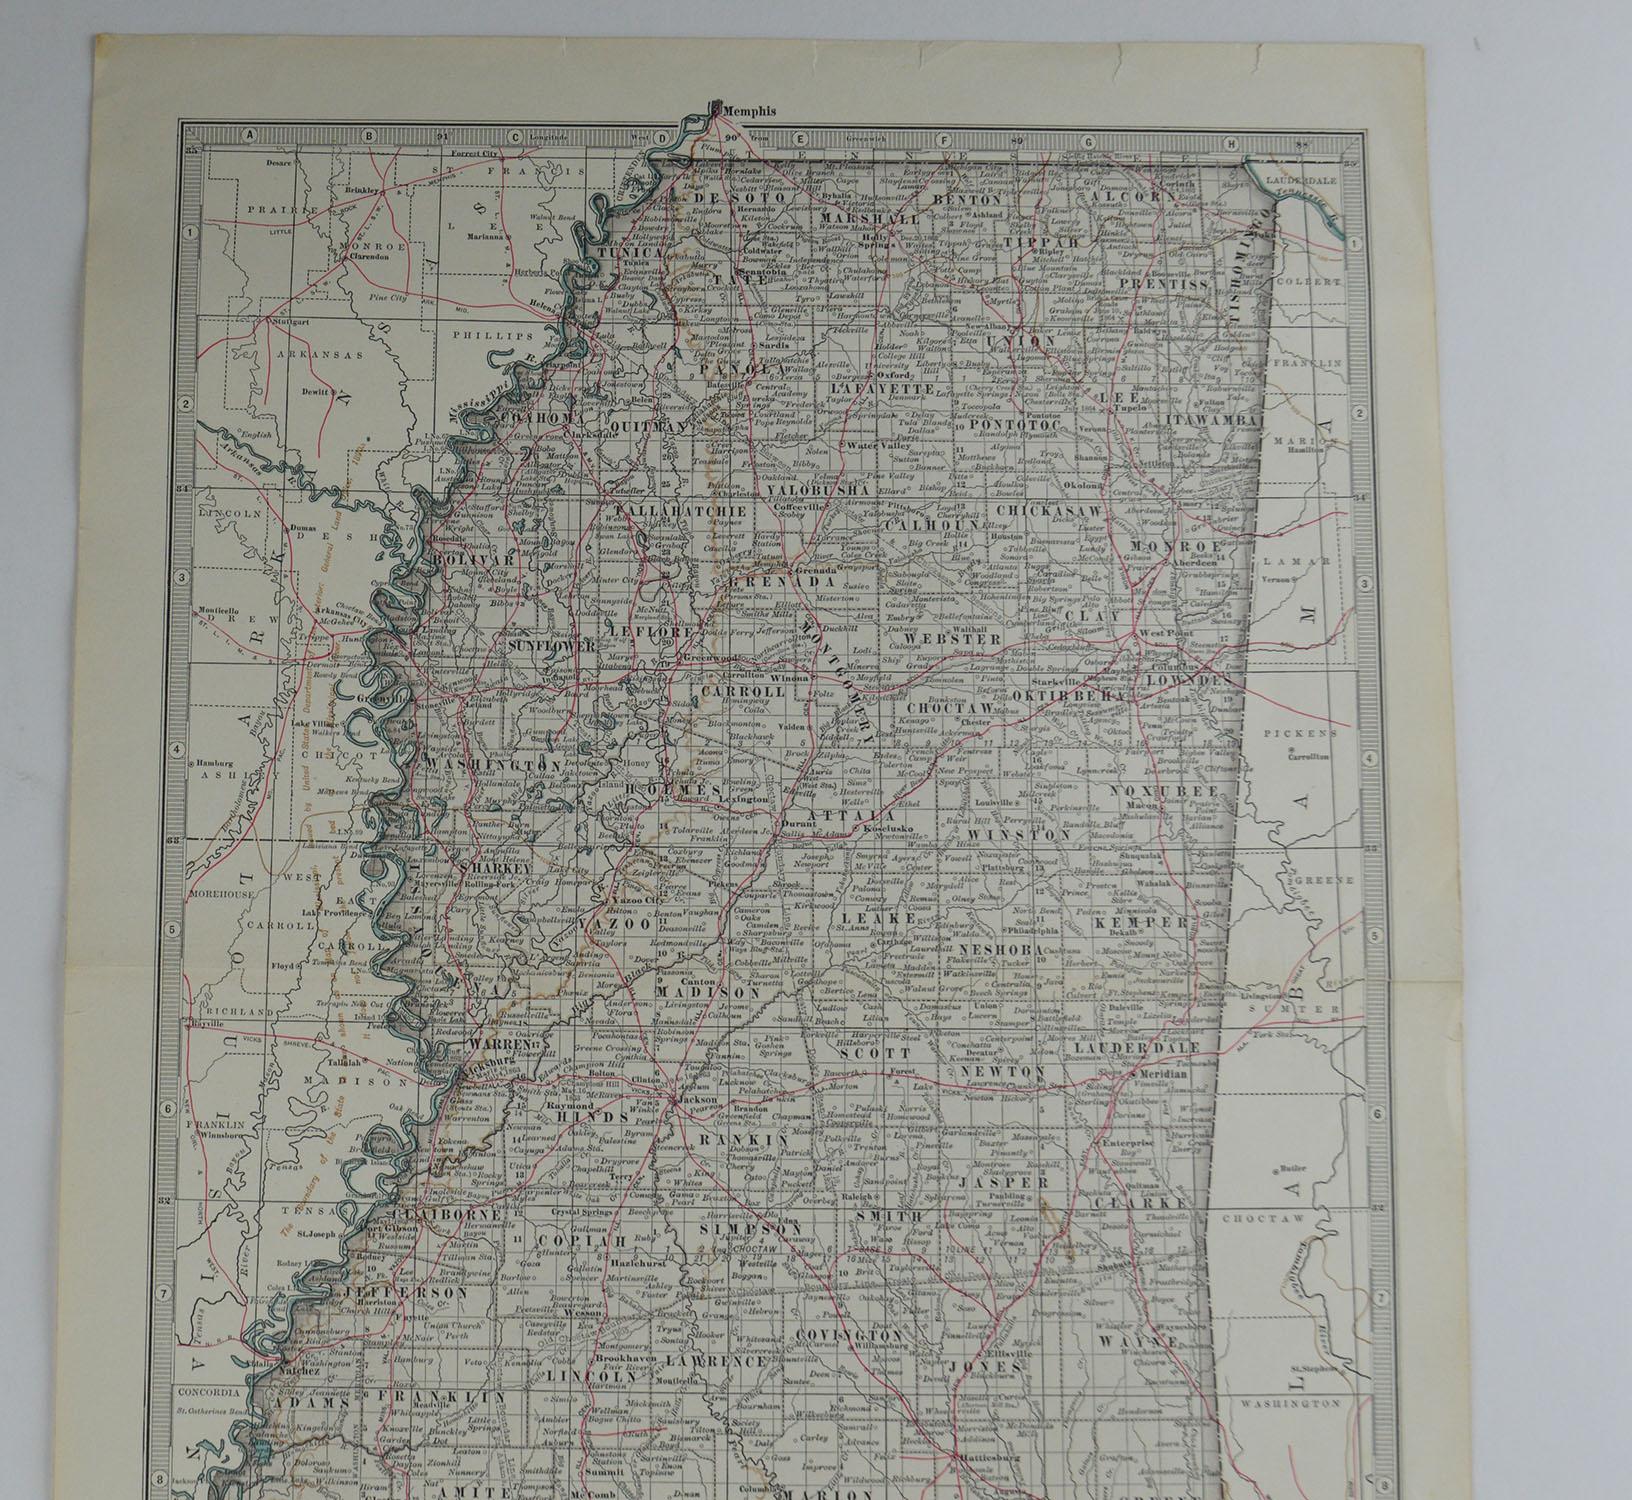 Other Original Antique Map of Mississippi, circa 1890